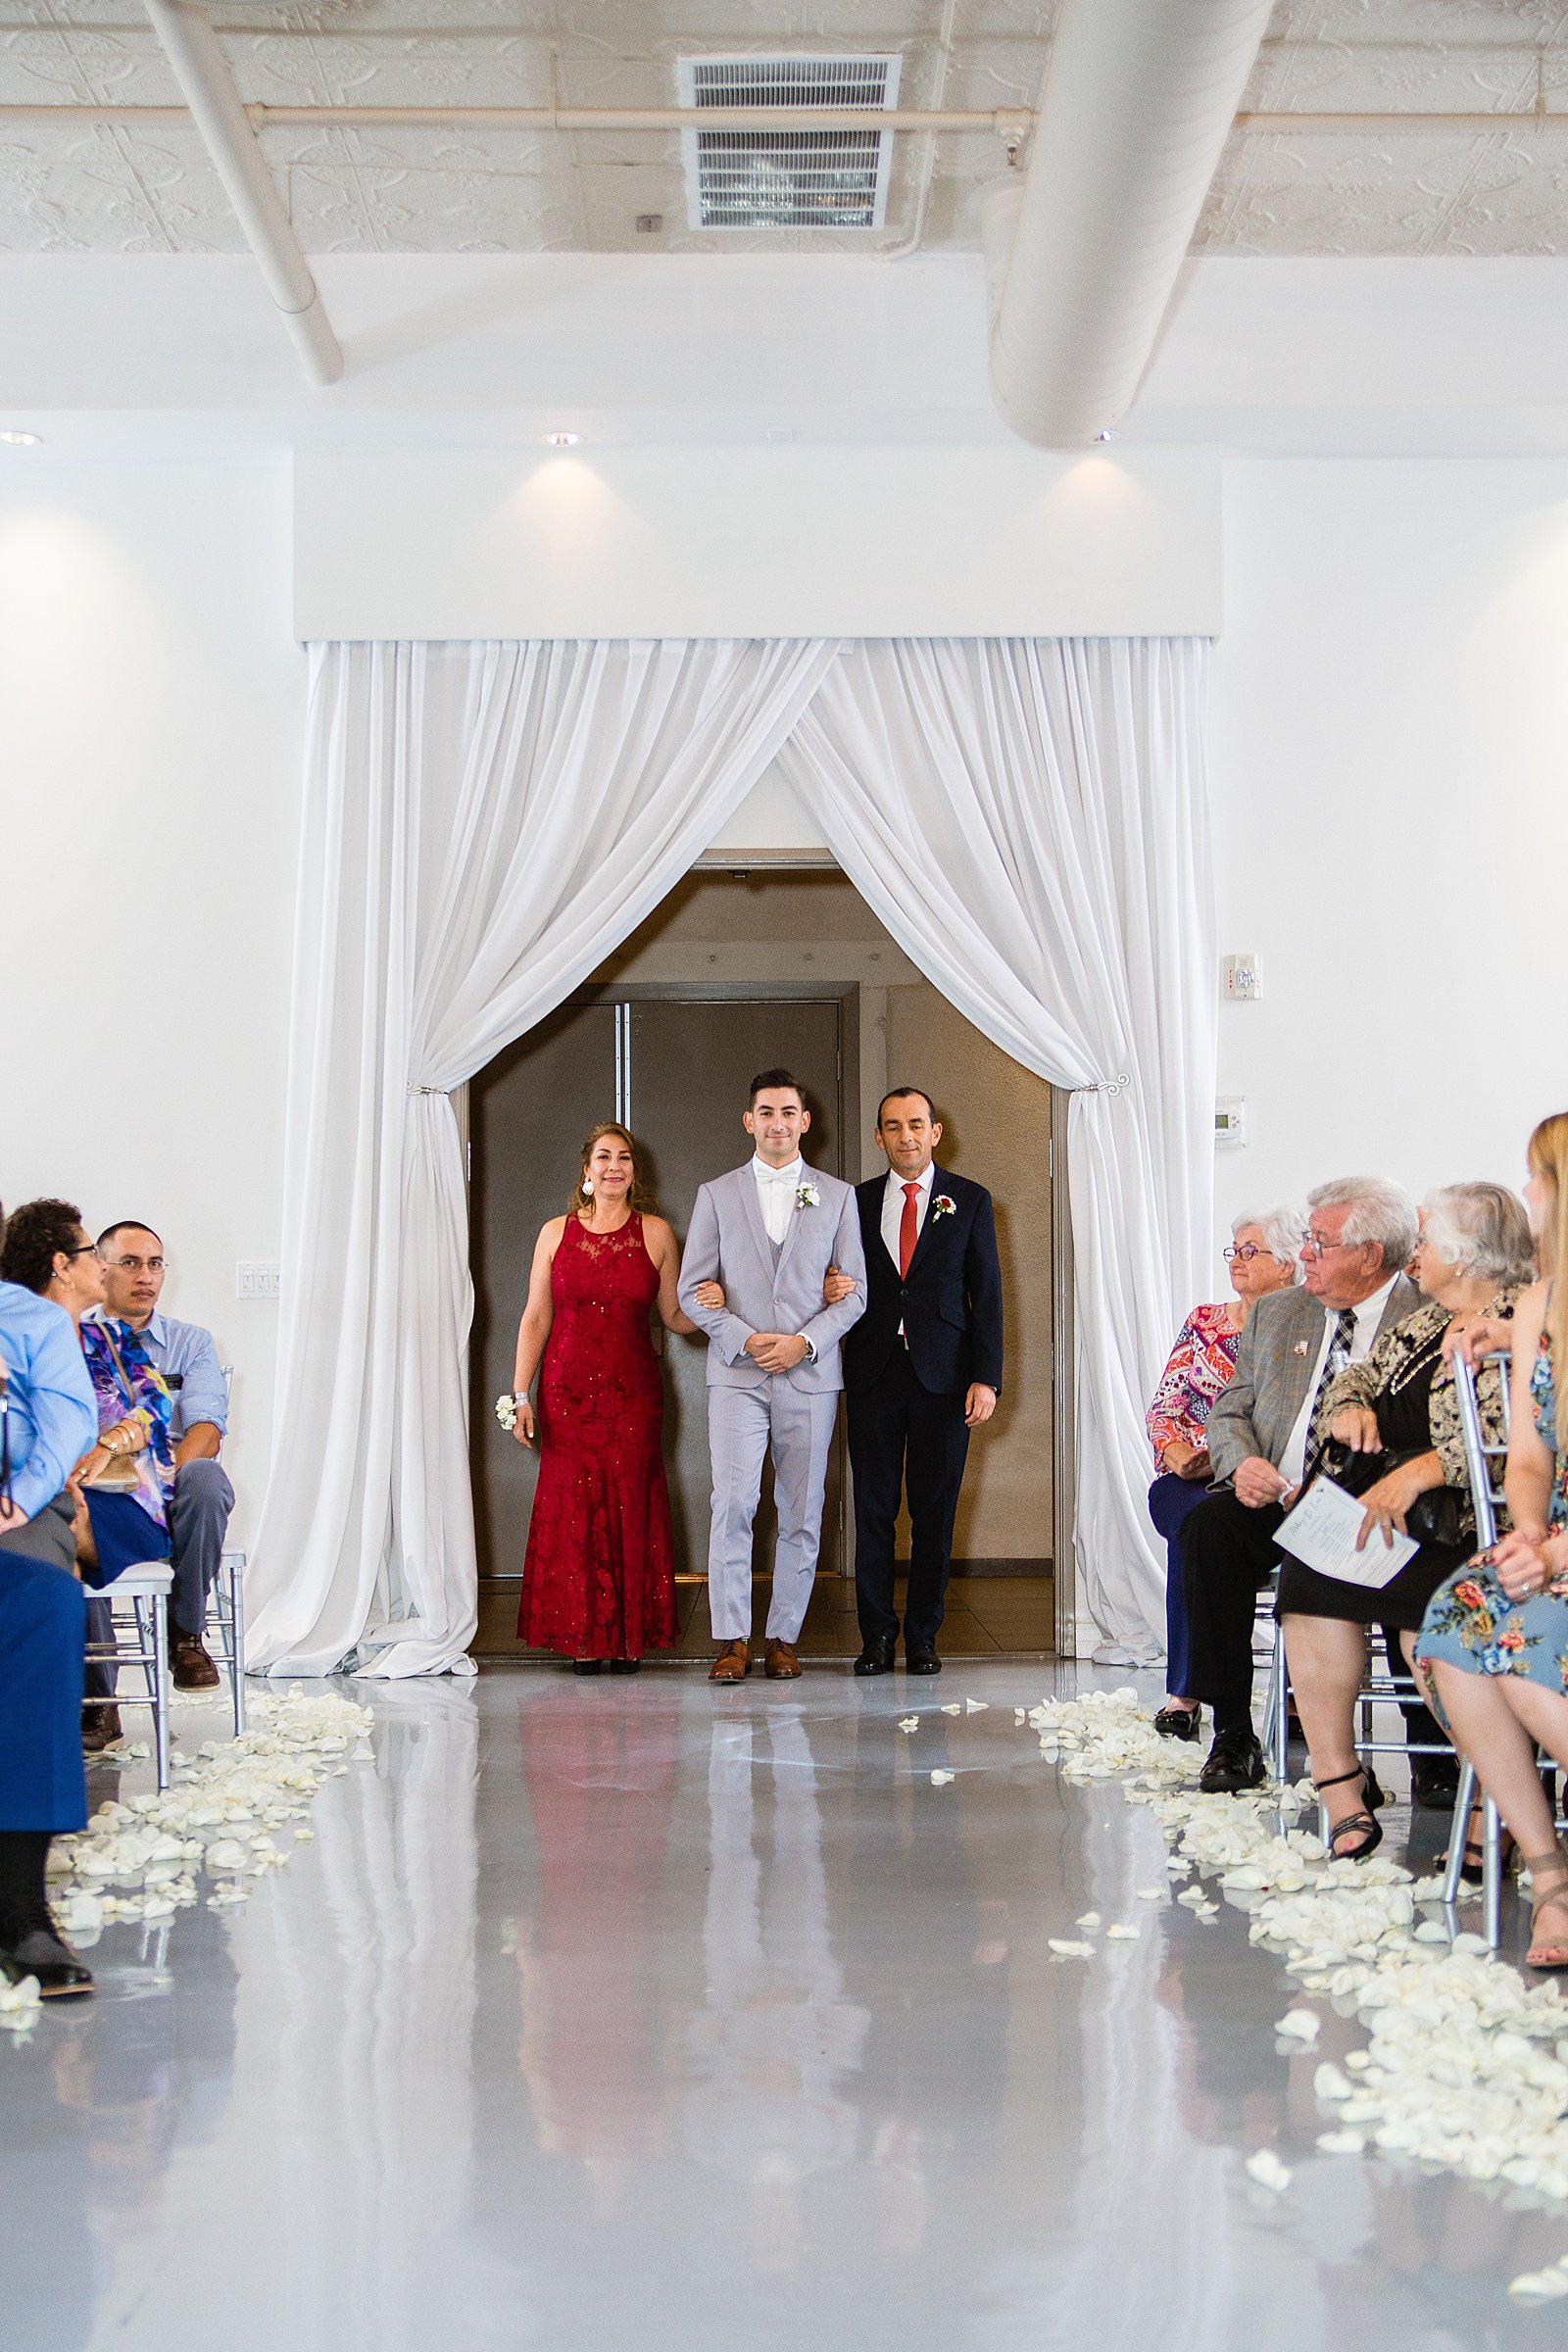 Groom walking down aisle during SoHo63 wedding ceremony by Phoenix wedding photographer PMA Photography.